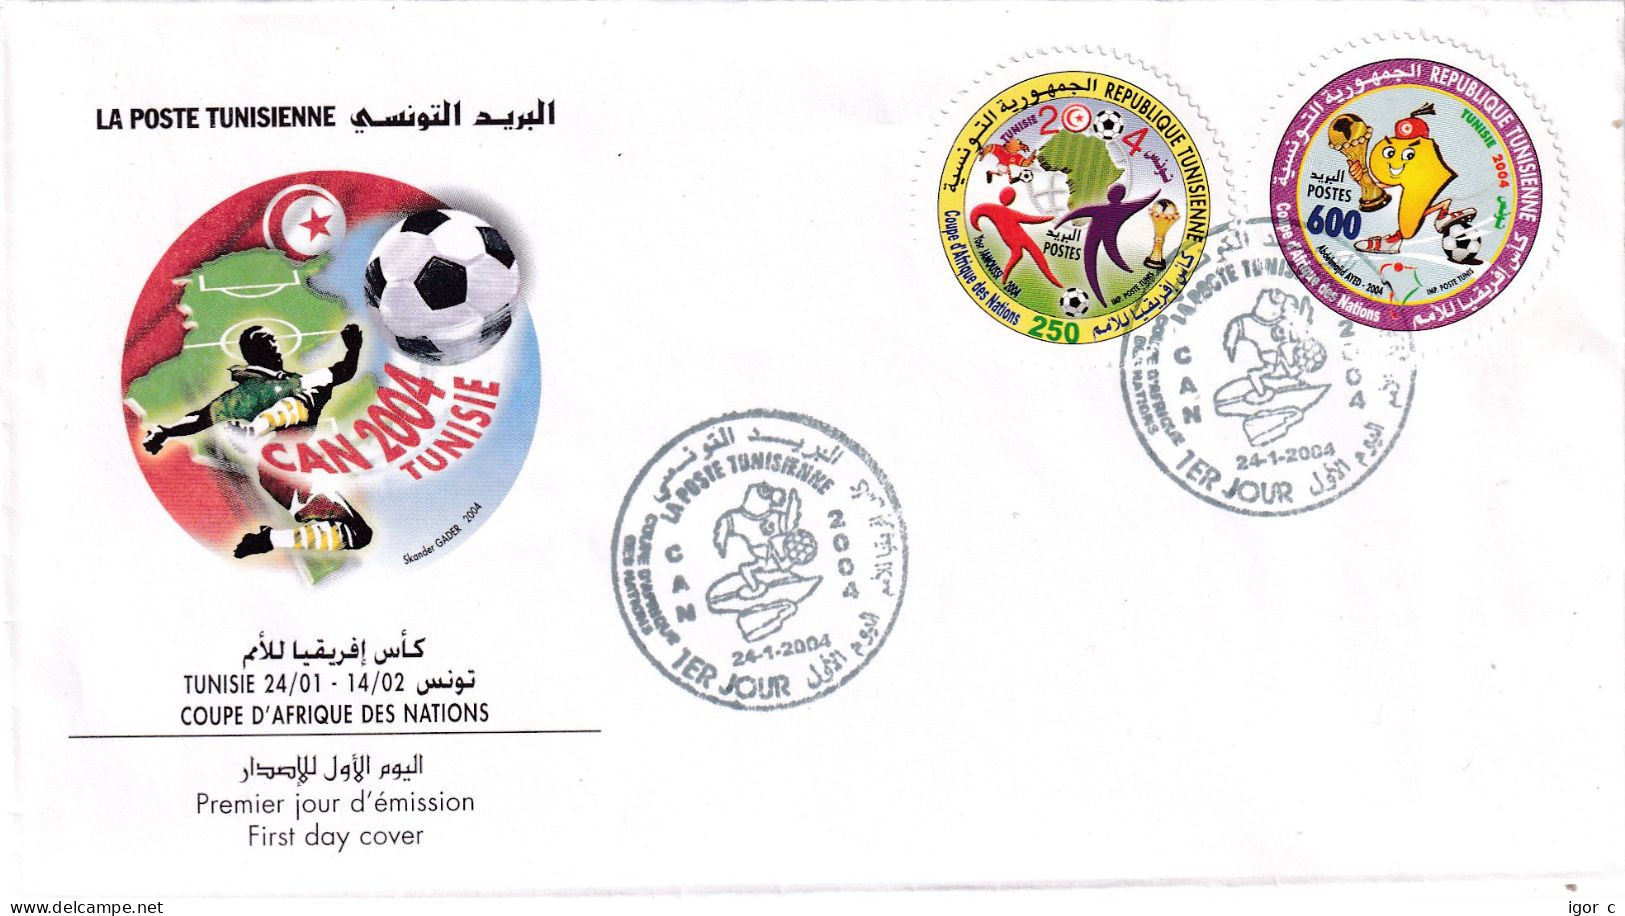 Tunis Tunisia 2004 Cover; Football Fussball Soccer Calcio; Coupe D'Afrique Des Nations - Fußball-Afrikameisterschaft